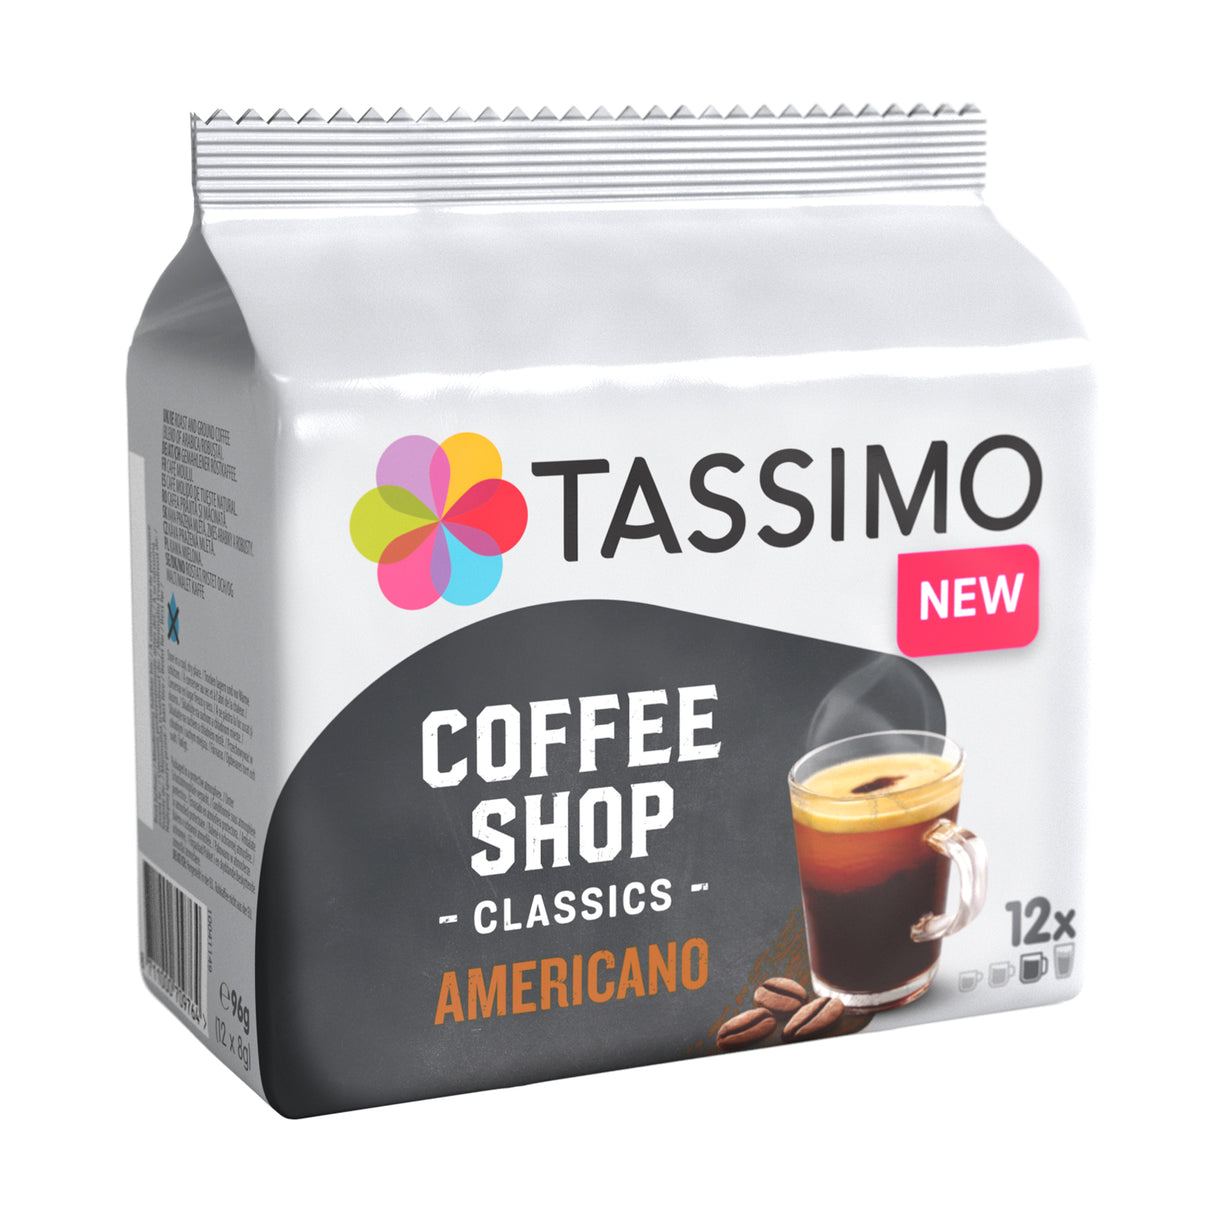 Tassimo Coffee Shop Classics Americano Coffee Pods pack